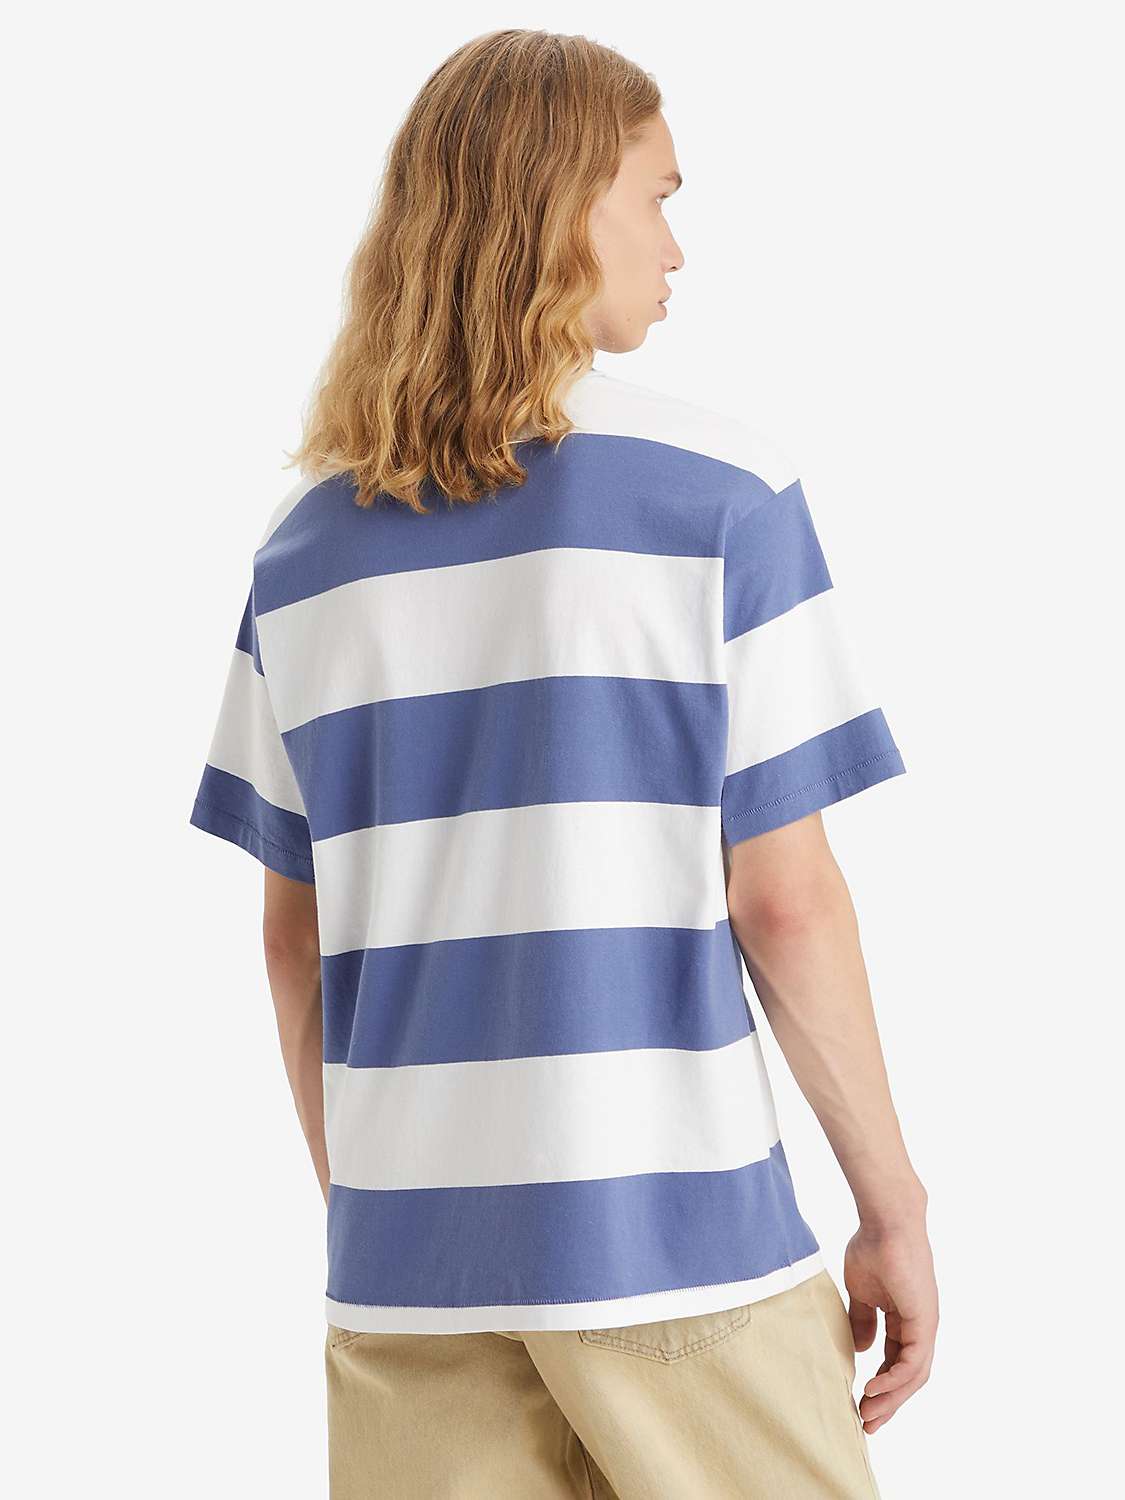 Buy Levi's Red Tab Vintage Stripe T-Shirt, Blue/White Online at johnlewis.com